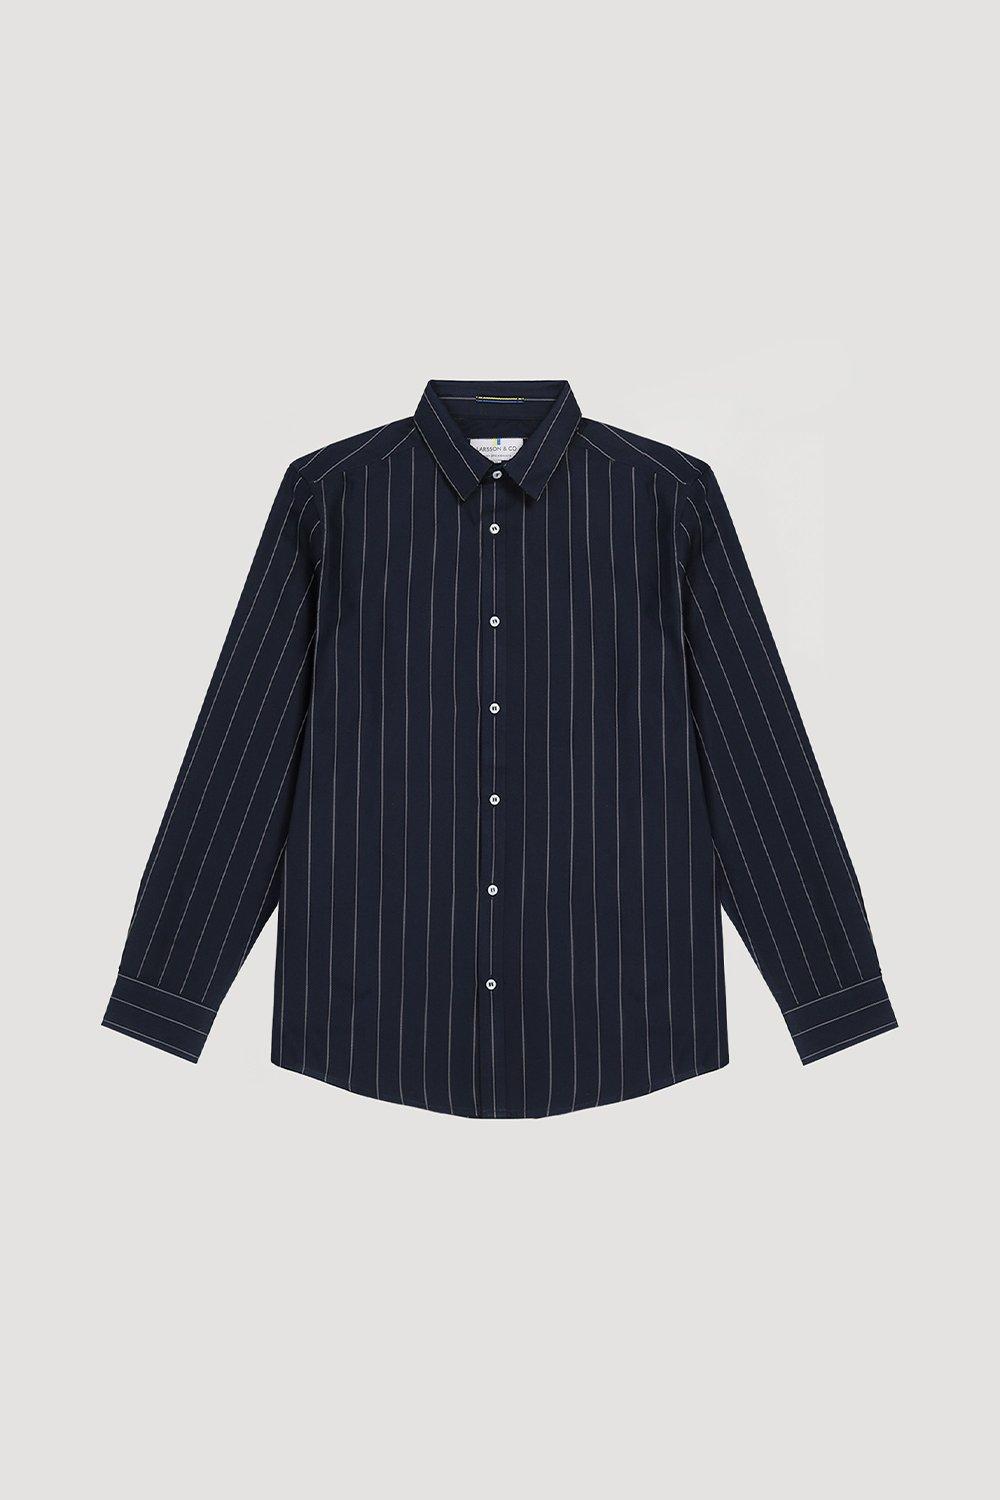 Темно-синяя рубашка с длинным рукавом в полоску Larsson & Co, темно-синий